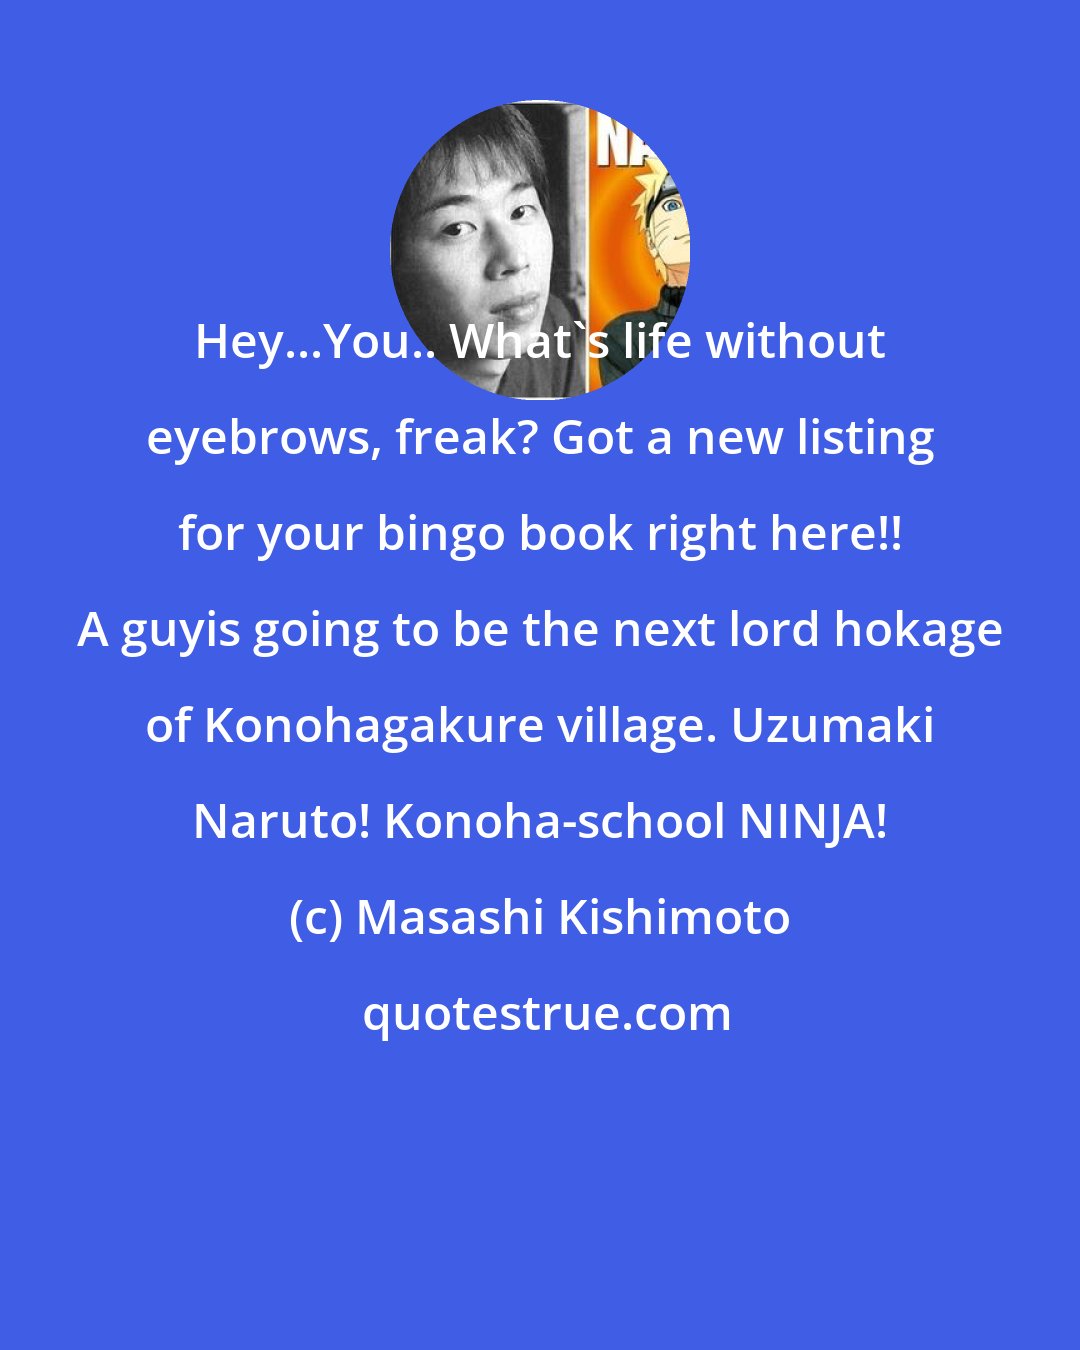 Masashi Kishimoto: Hey...You.. What's life without eyebrows, freak? Got a new listing for your bingo book right here!! A guyis going to be the next lord hokage of Konohagakure village. Uzumaki Naruto! Konoha-school NINJA!